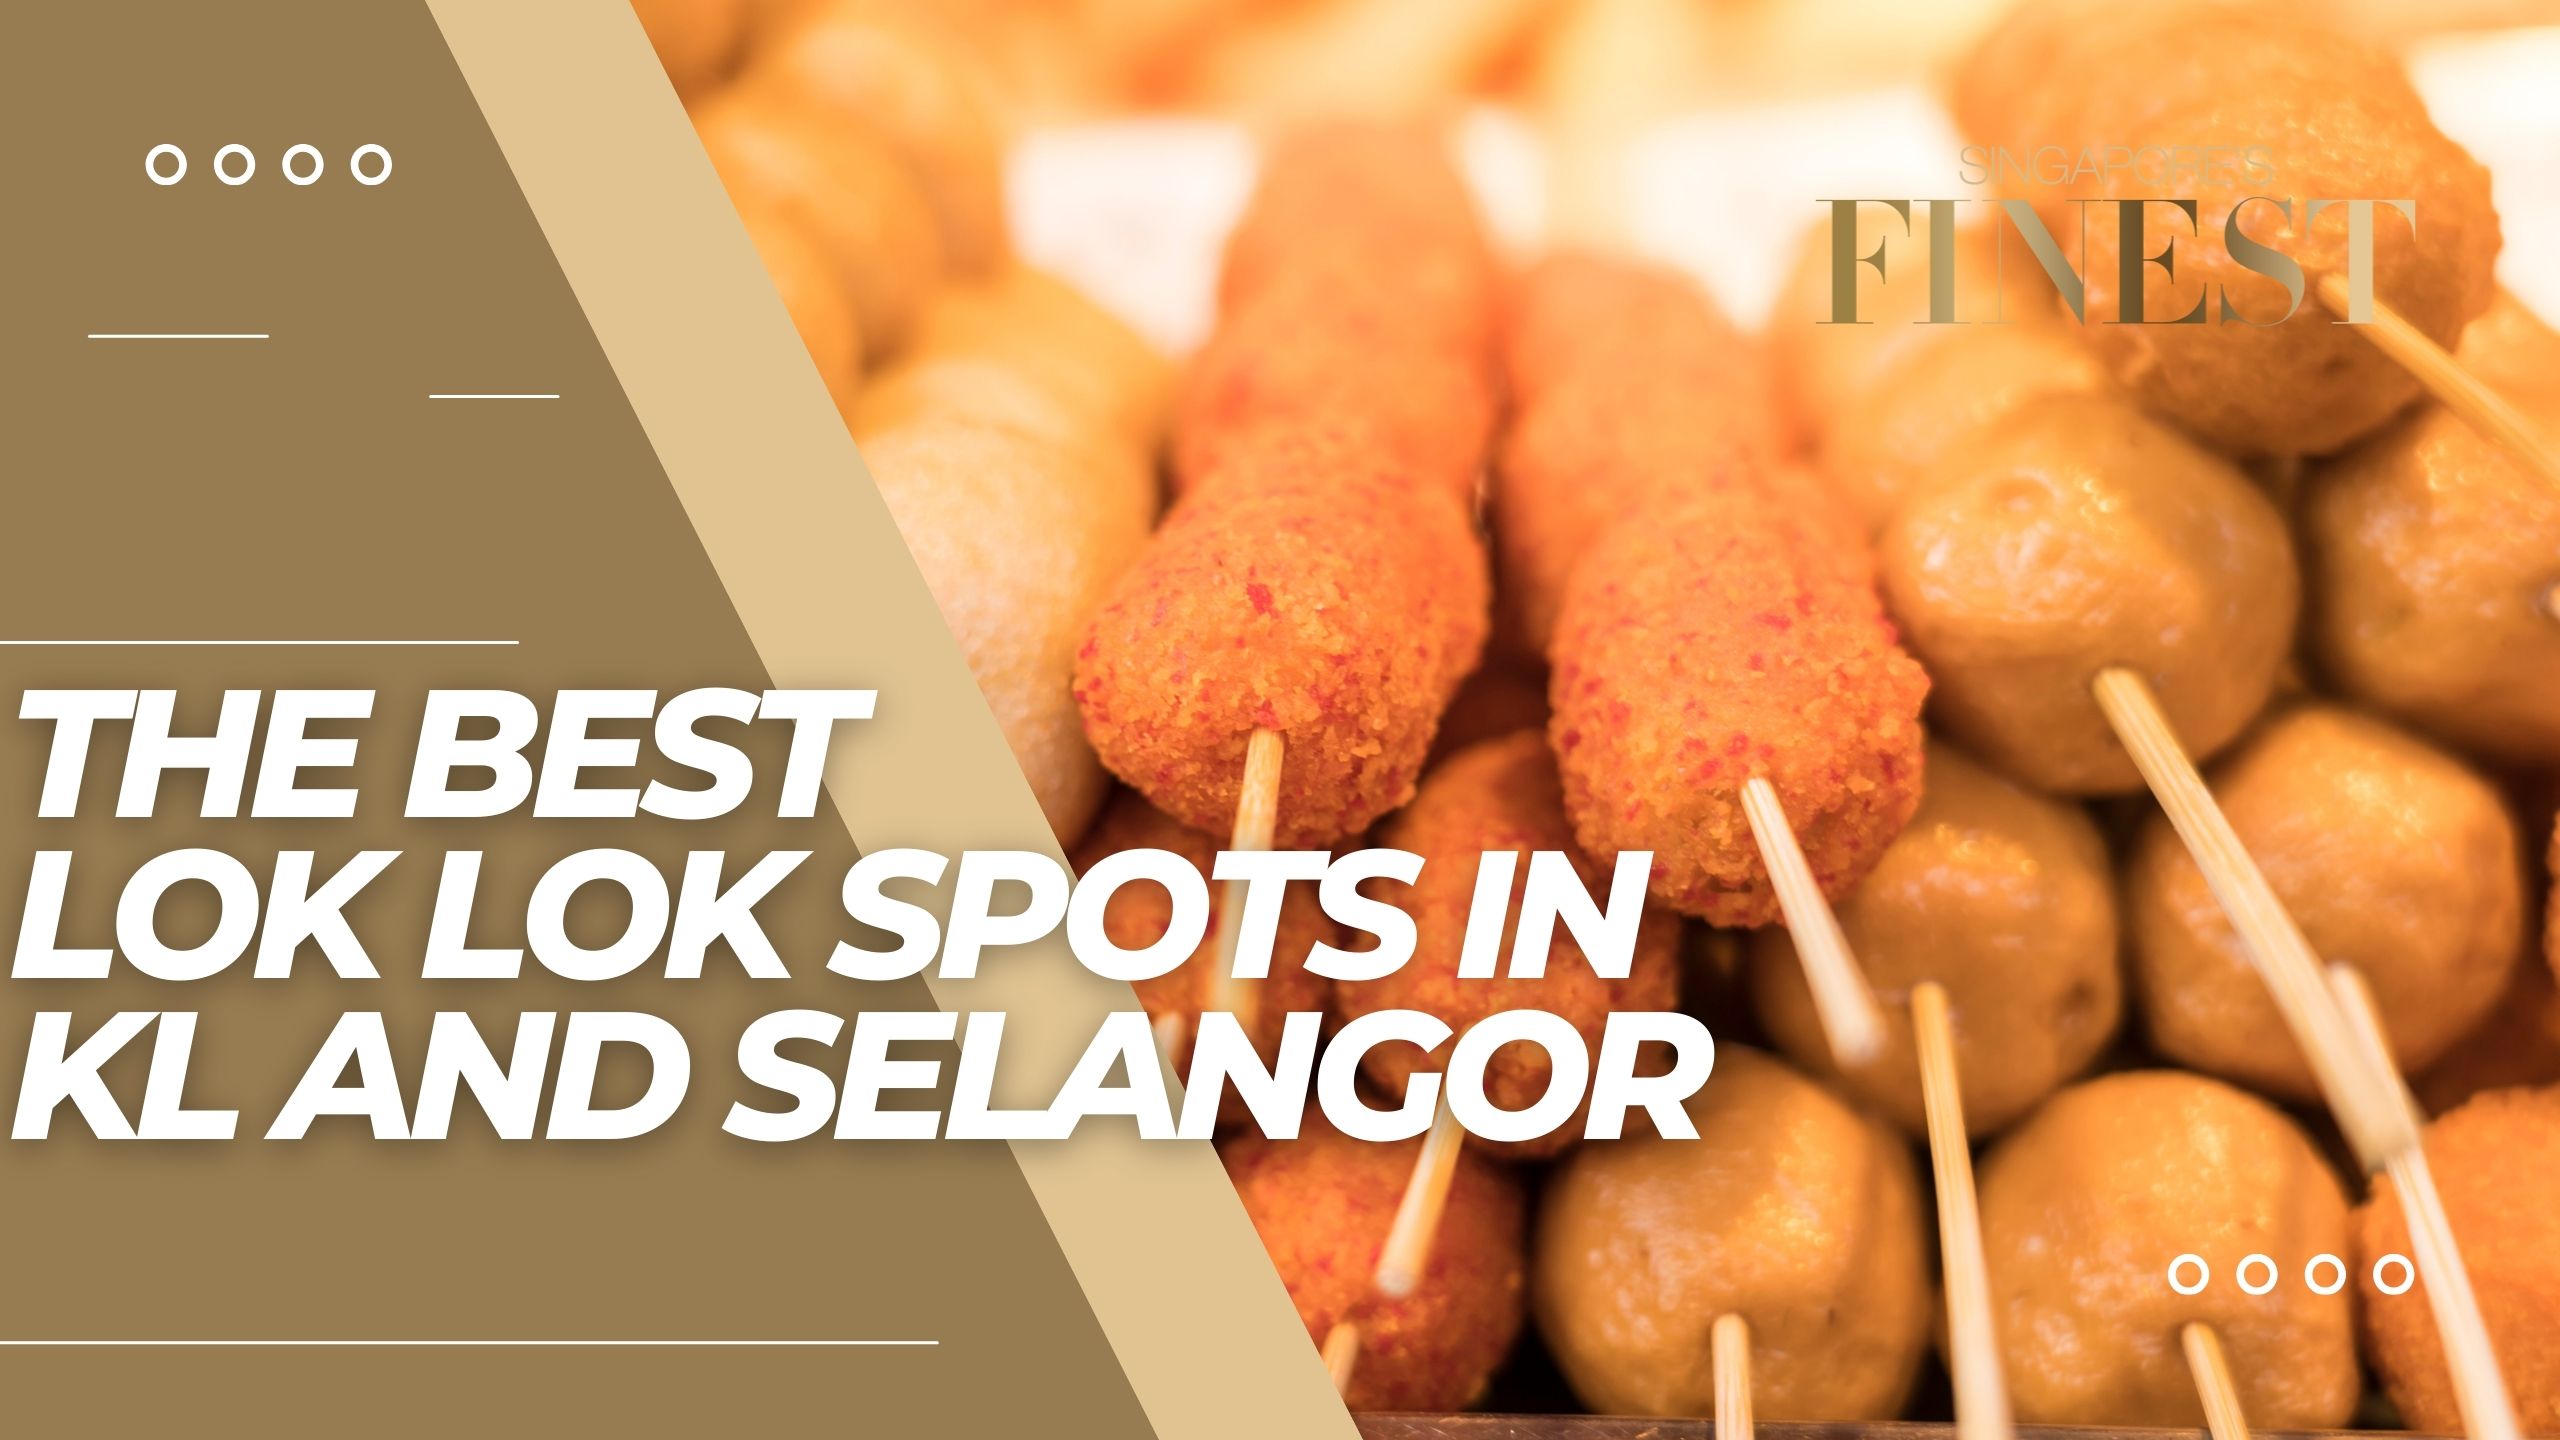 The Finest Lok Lok Spots in KL and Selangor